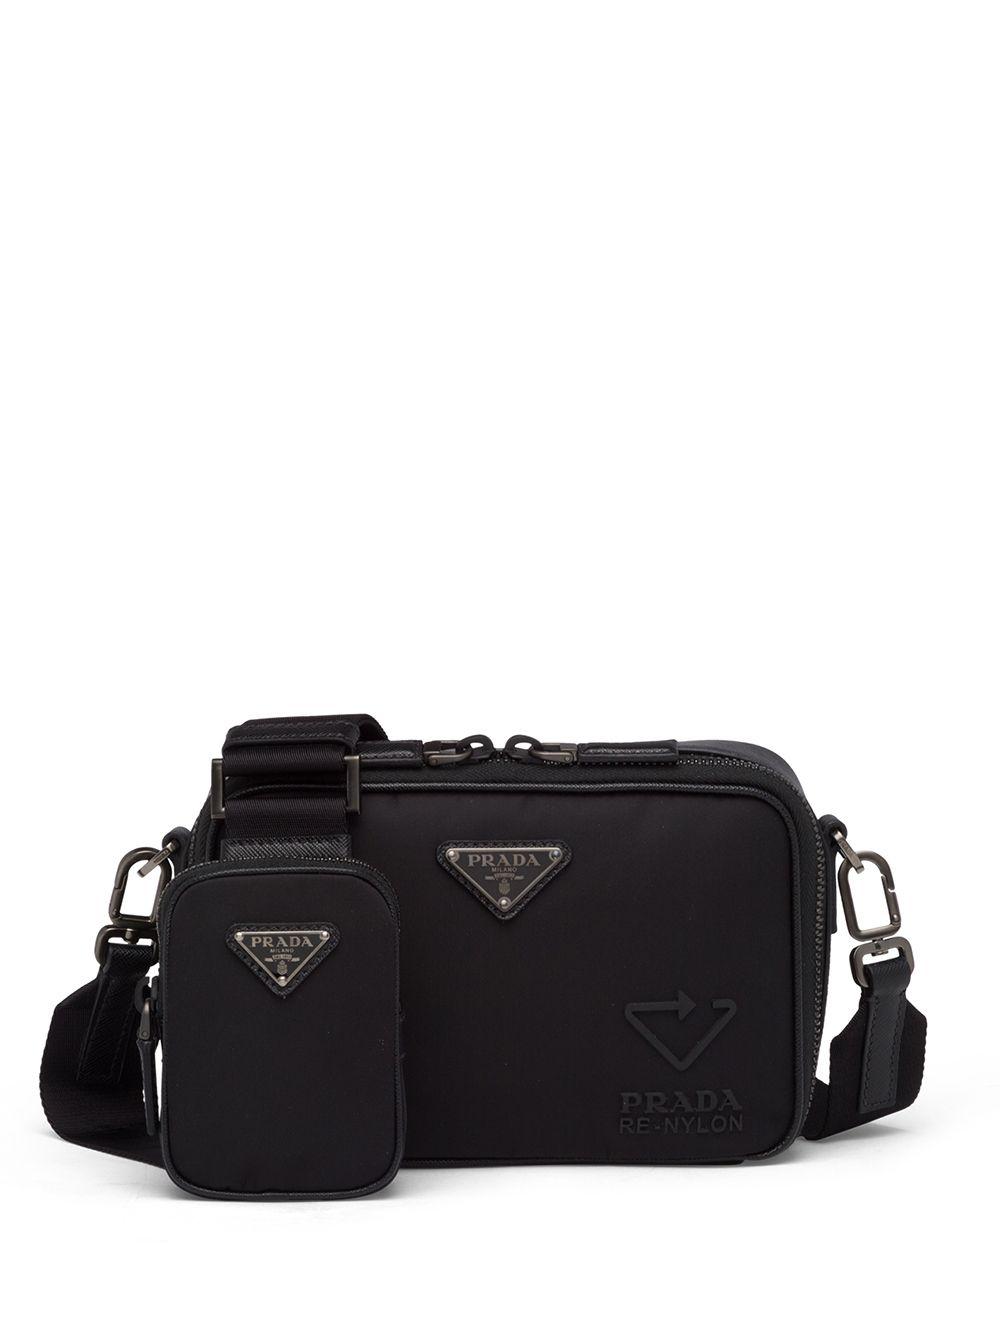 Prada, Bags, Prada Renylon Saffiano Leather Shoulder Bag With Matching  Pouch